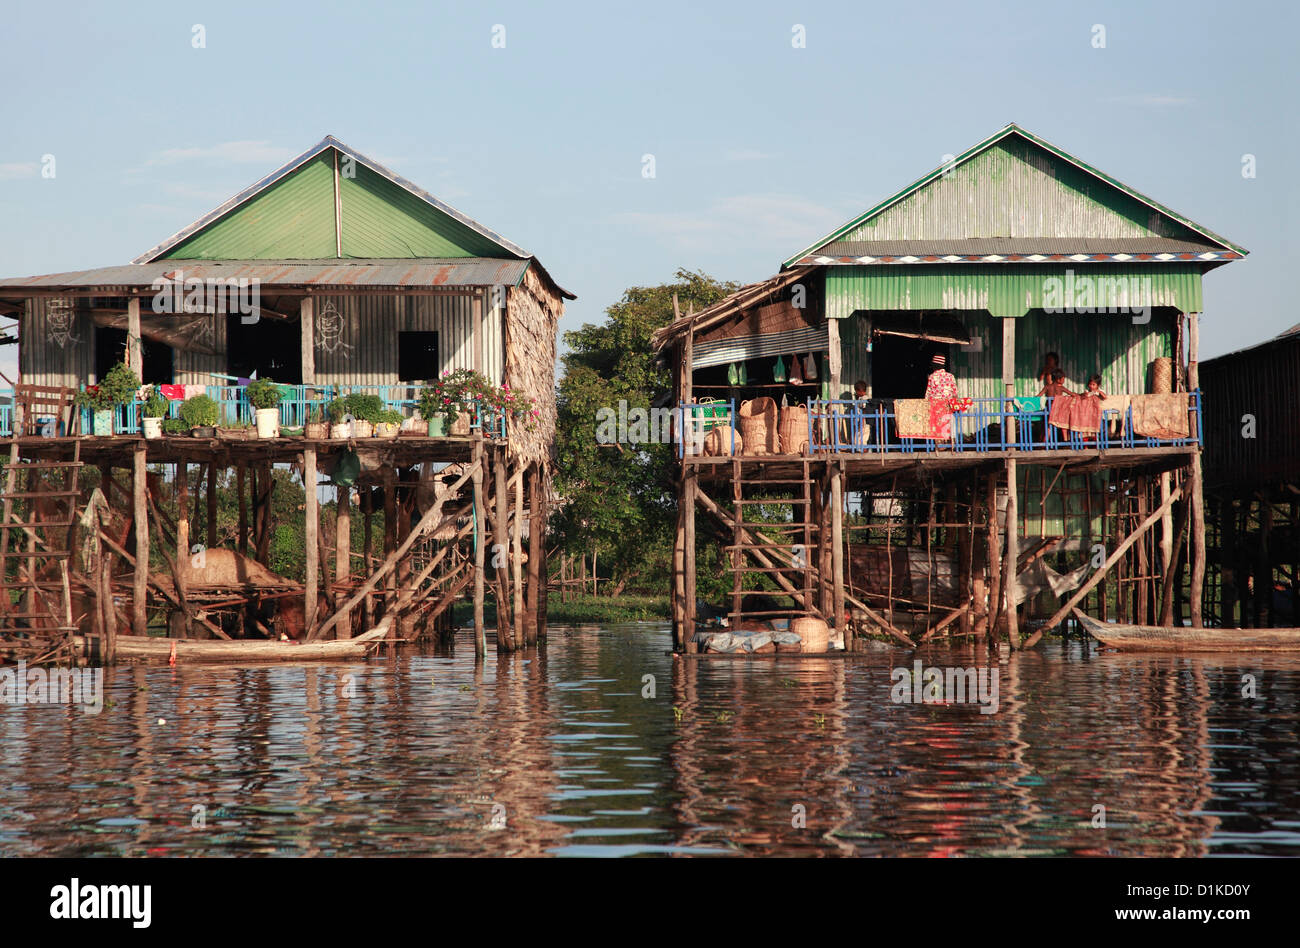 Stilt houses on a river, Siem Reap, Cambodia Stock Photo